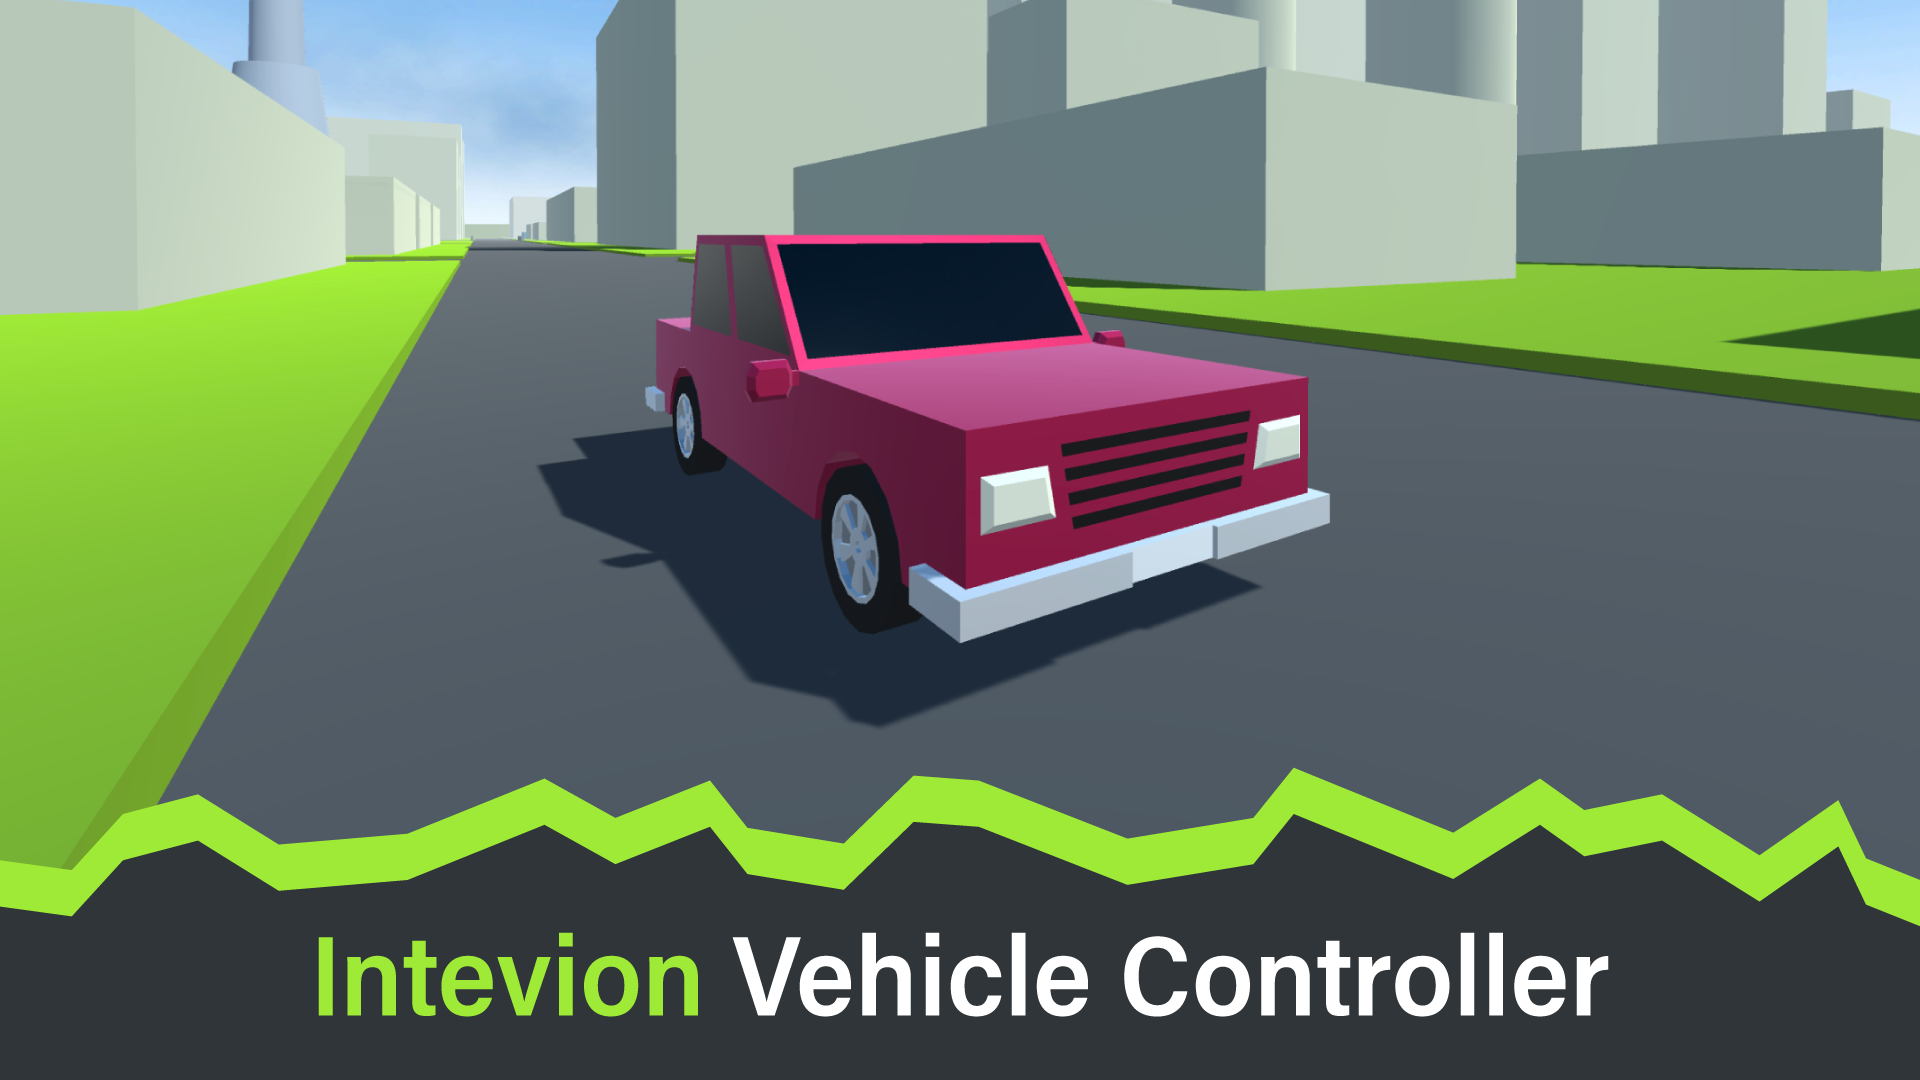 Intevion Vehicle Controller Demo